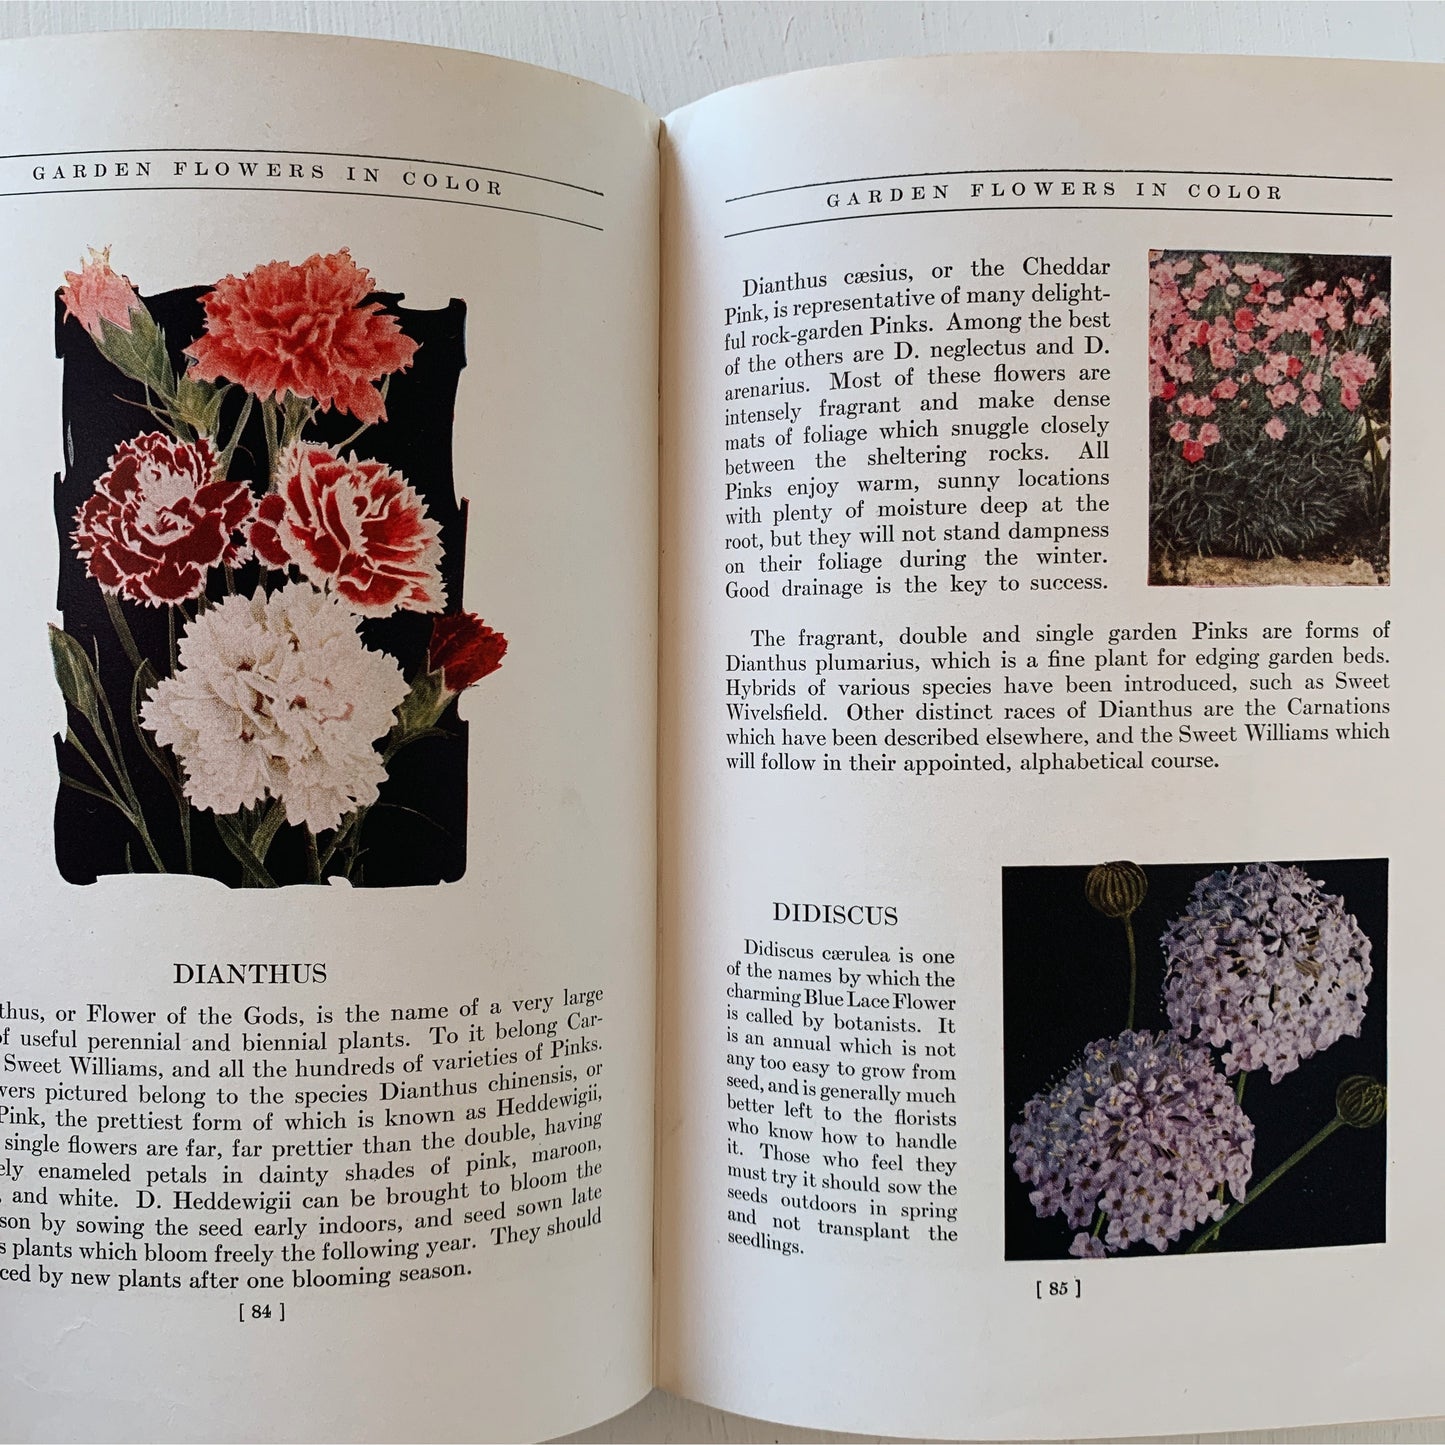 Garden Flowers in Color, 1939, G.A. Stevens, Botanical Illustrations